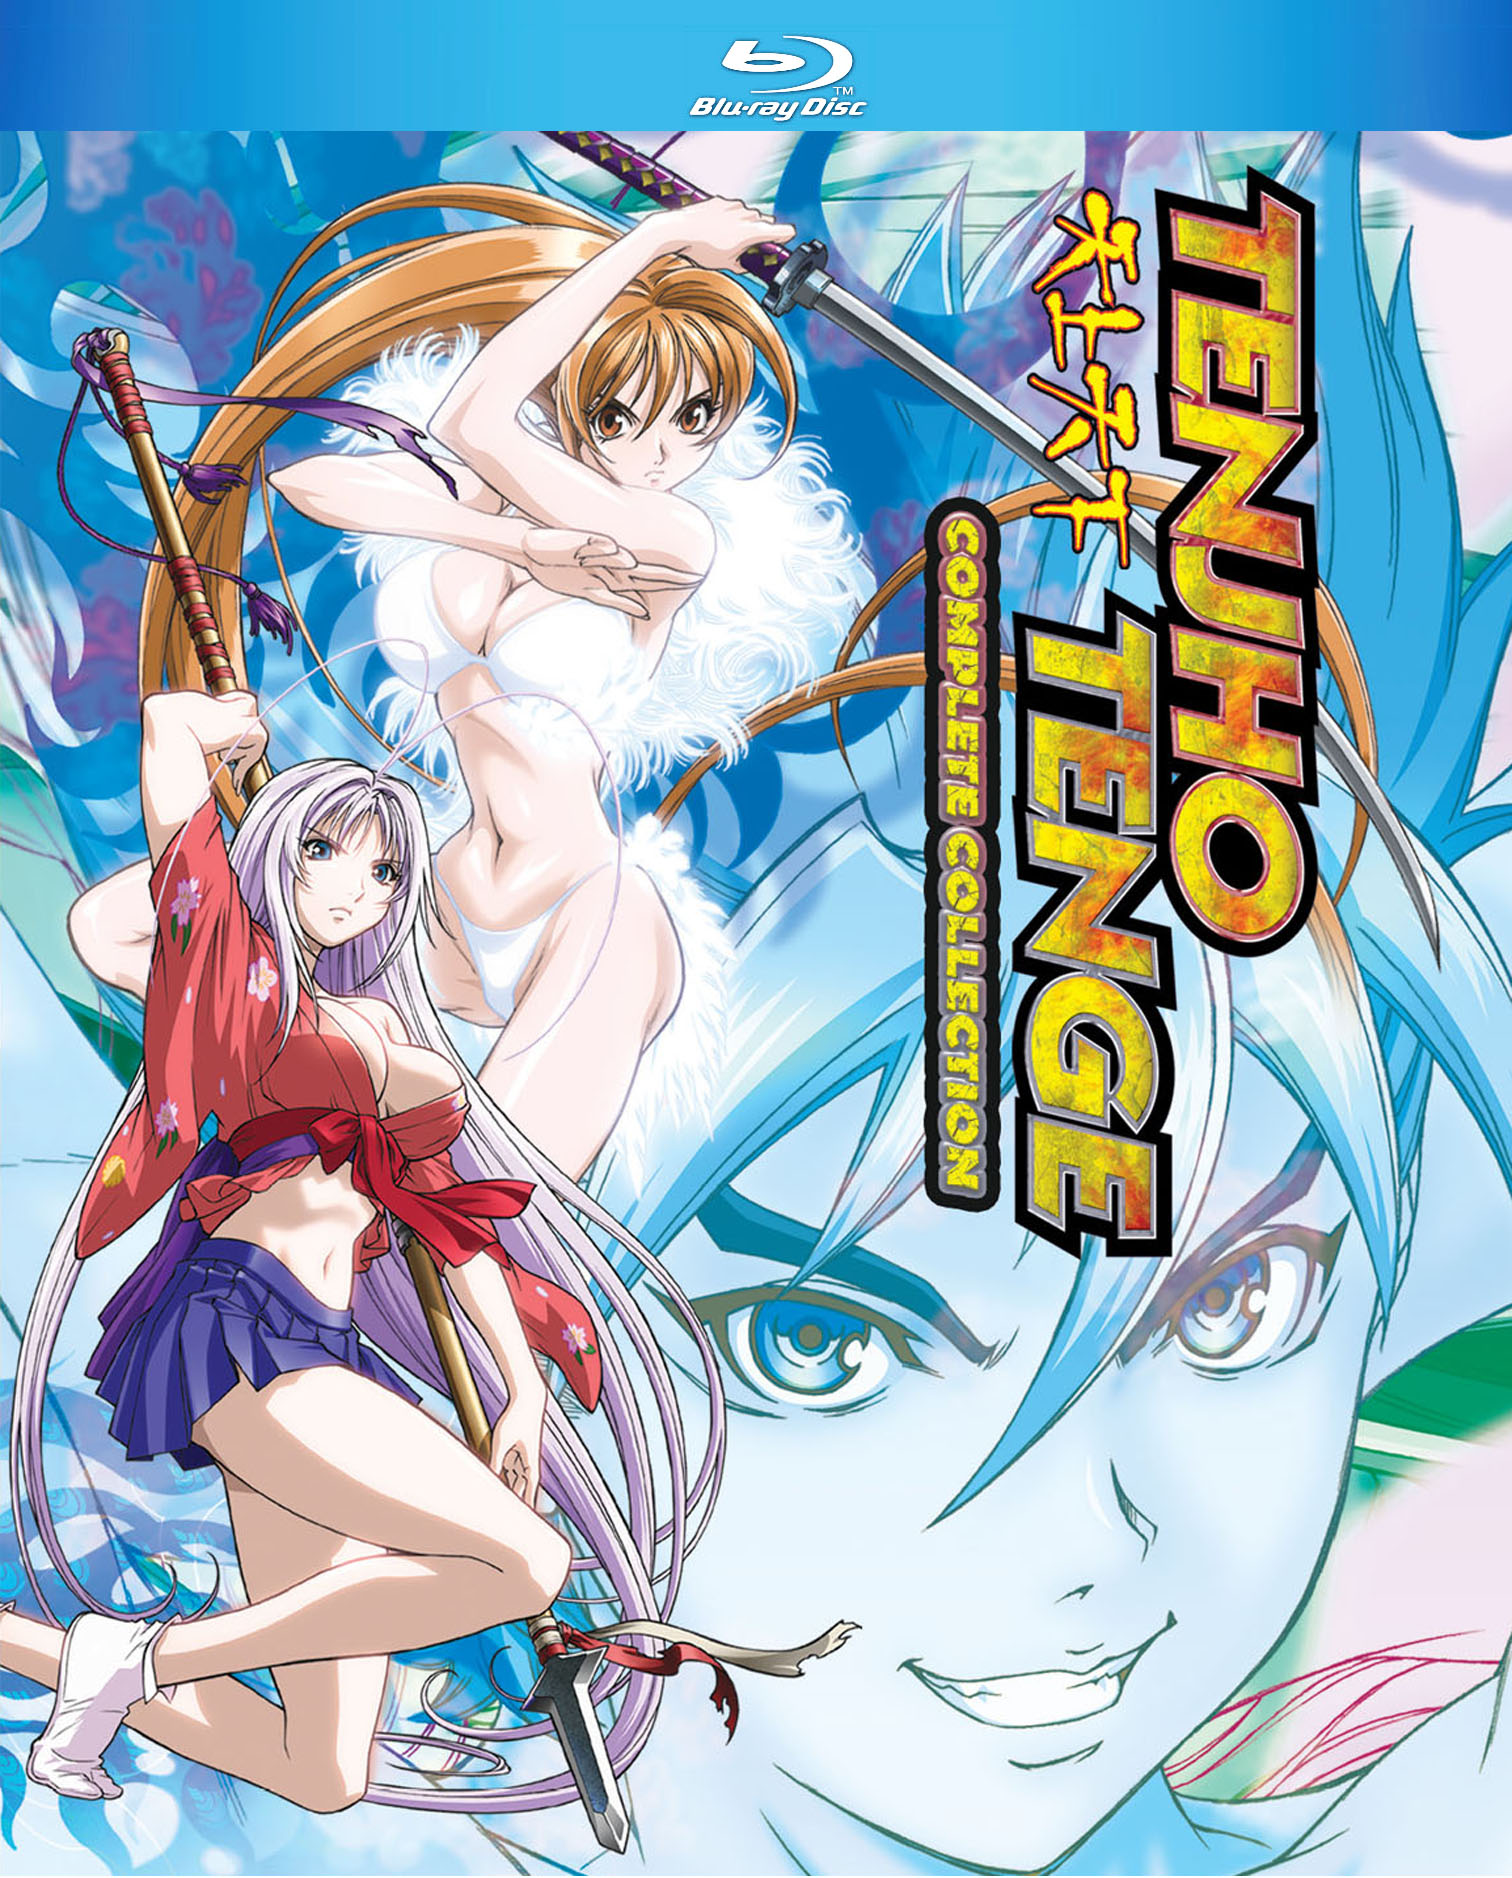 Tenjho Tenge DVD 6 - Review - Anime News Network